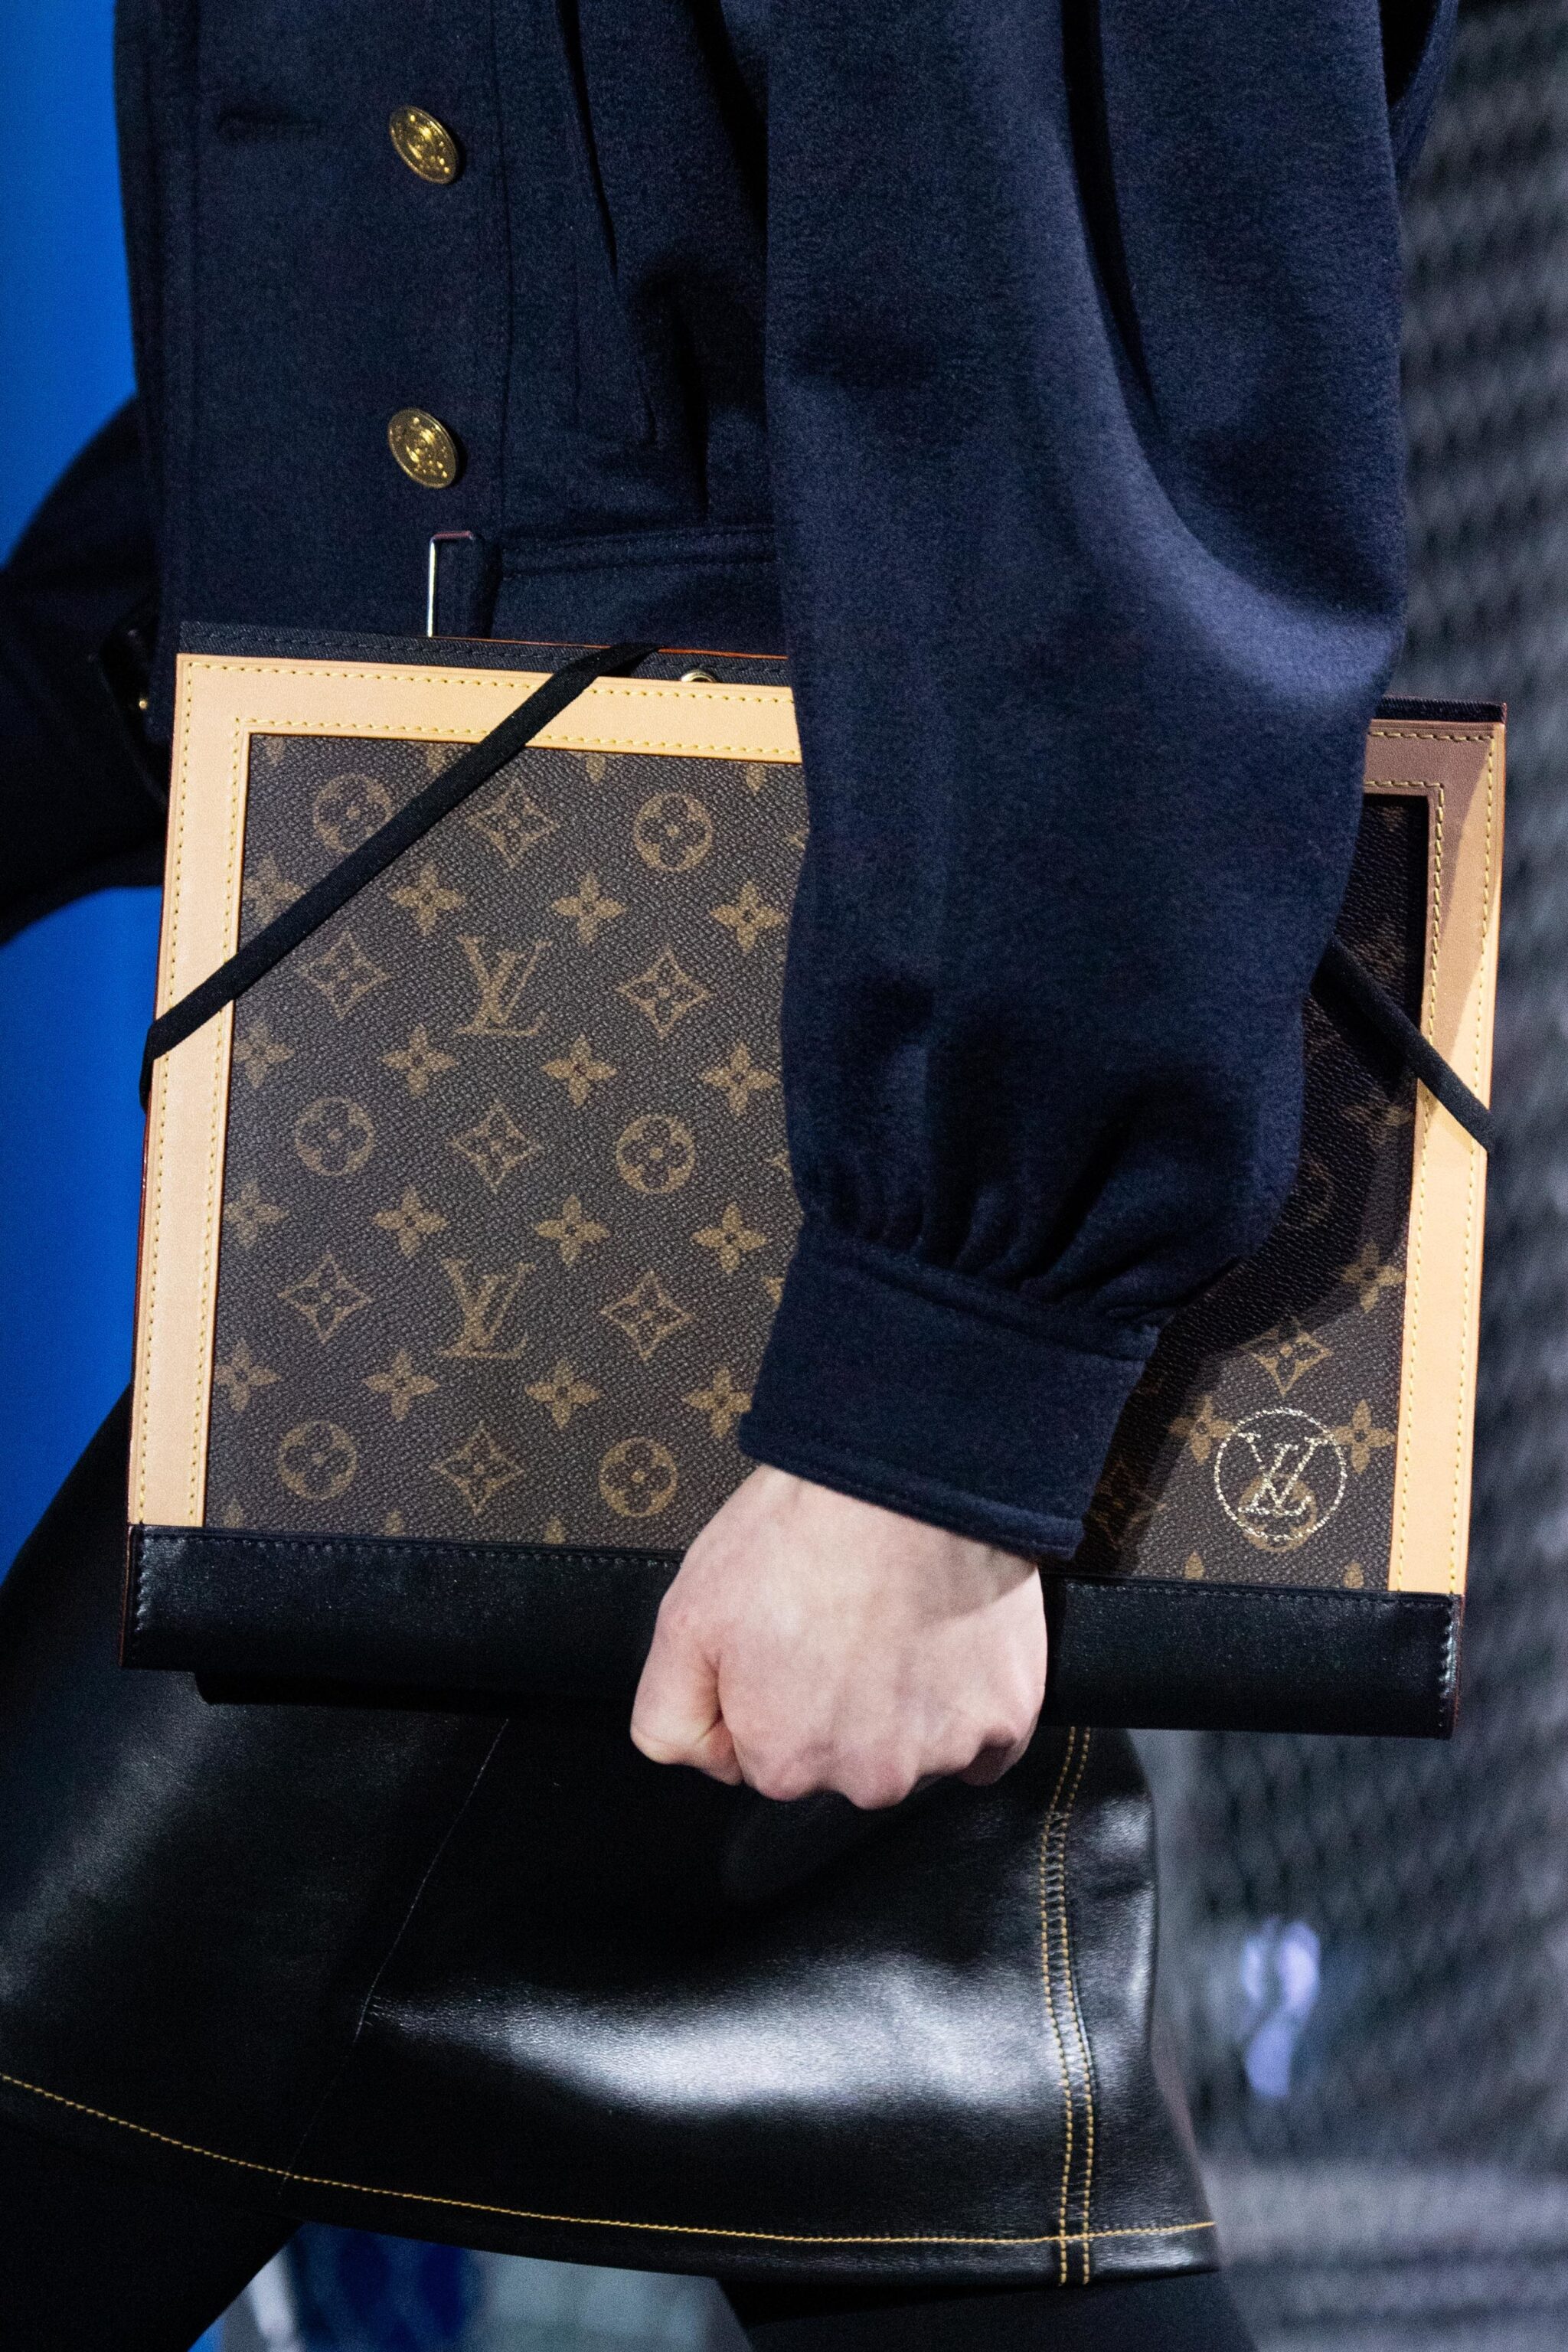 2019 New Louis Vuitton Handbags Collection for Women Fashion Bags  #Louisvuittonhandbags Must have it #purseshandbags